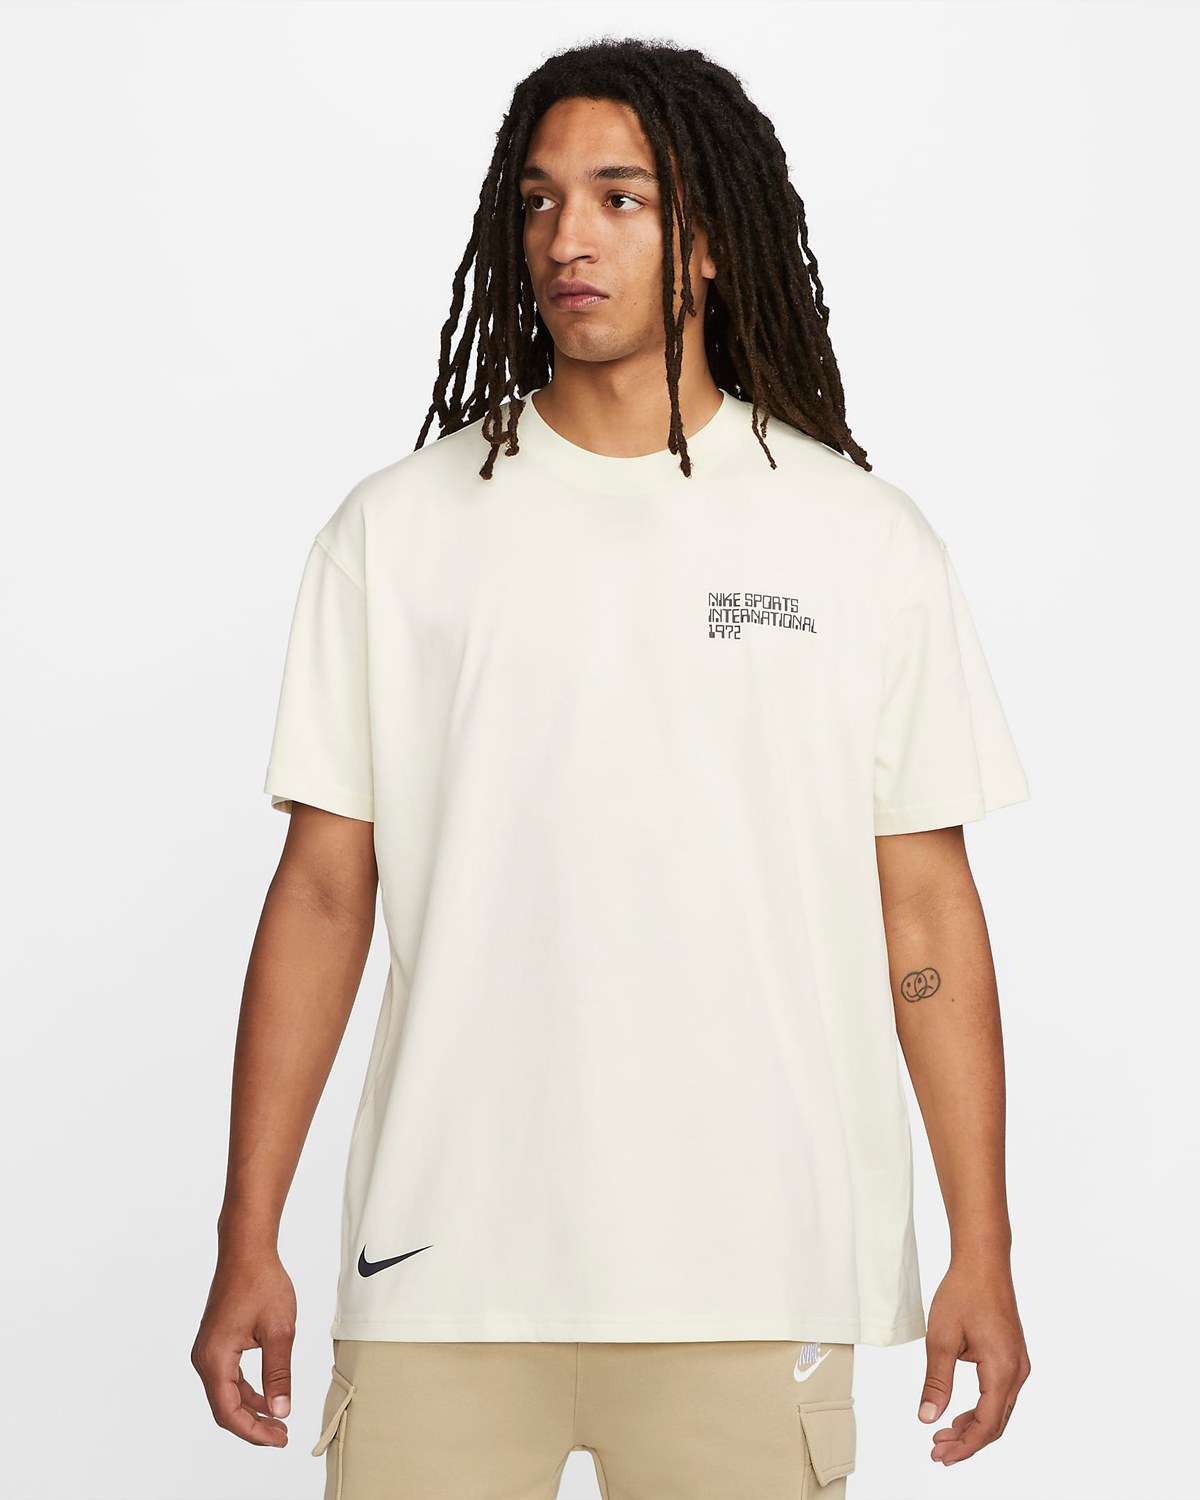 Nike Air Force 1 LA Flea Shirts Clothing Outfits